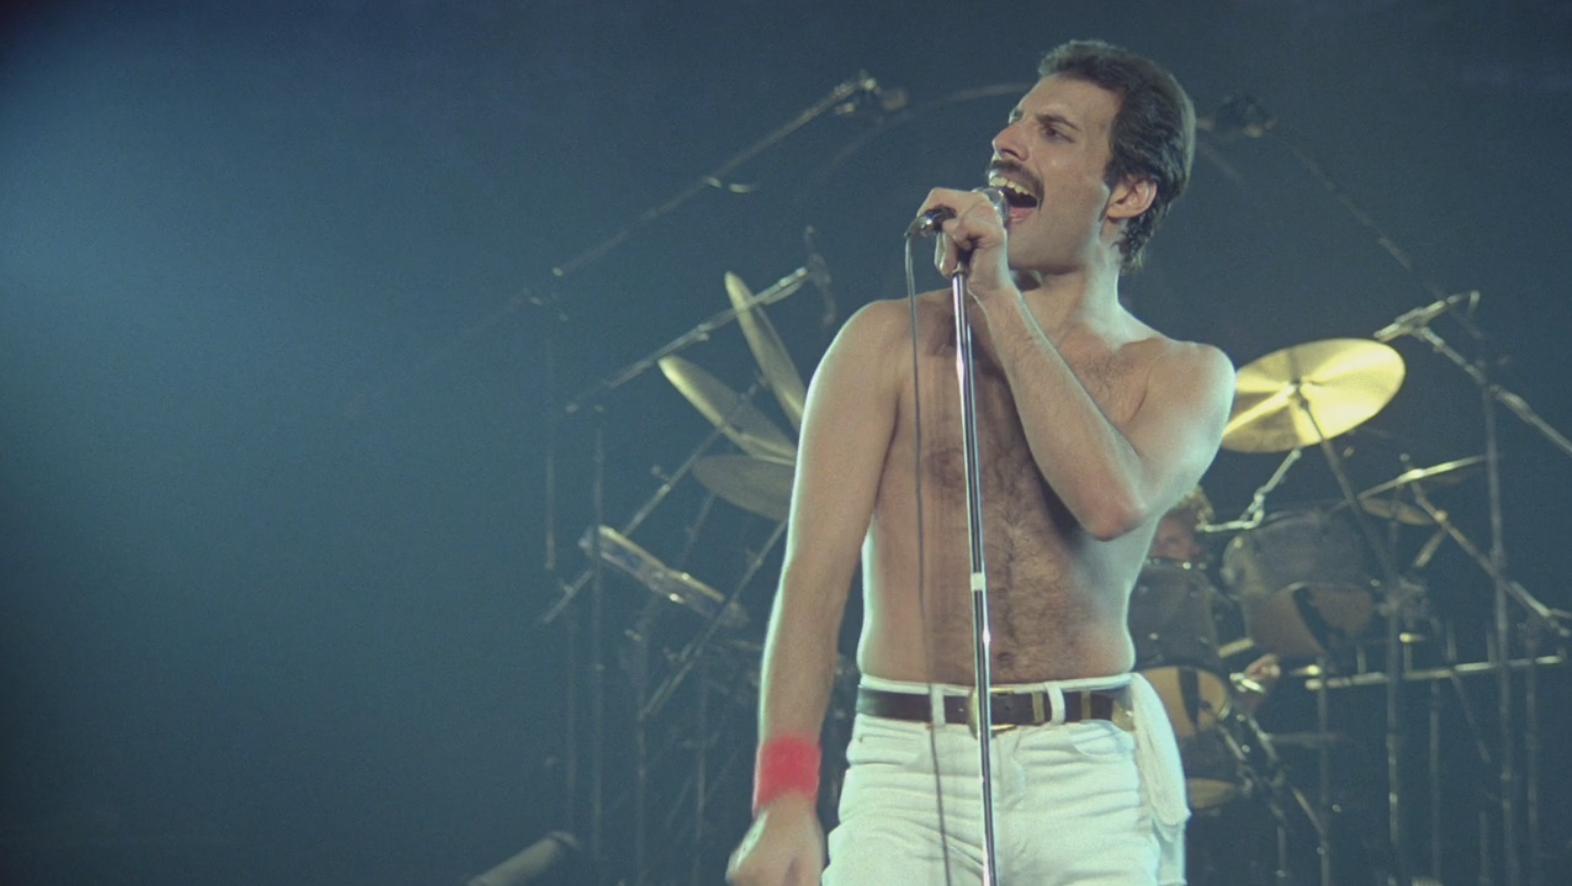 Clip show. Queen Фредди. Фредди Меркури show must. Фредди Меркьюри на концерте. Freddie Mercury show must go on клип.